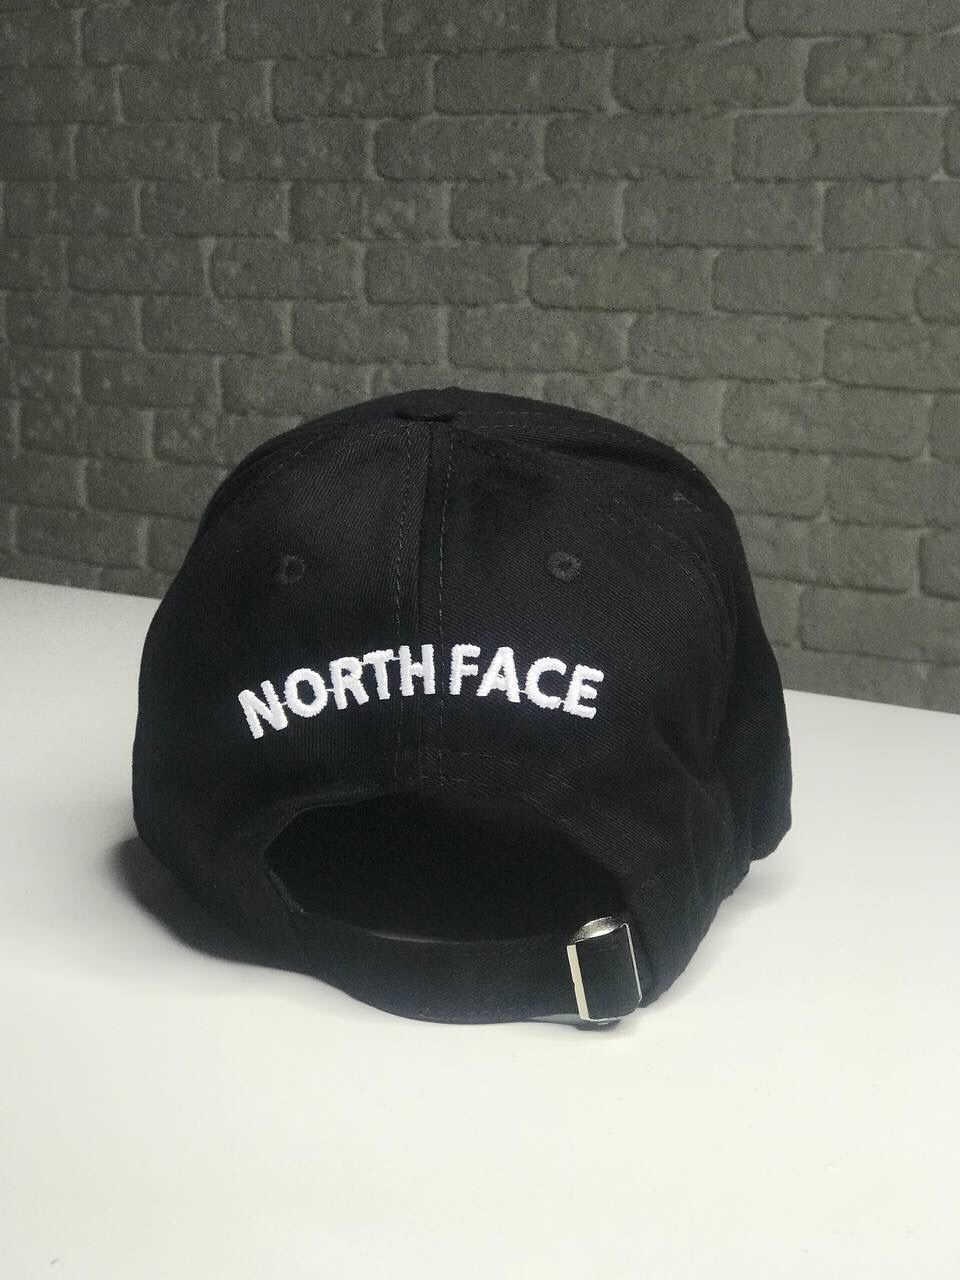 Бейсболка The North Face. Кепка The North Face. Бейсболка. Кепка.